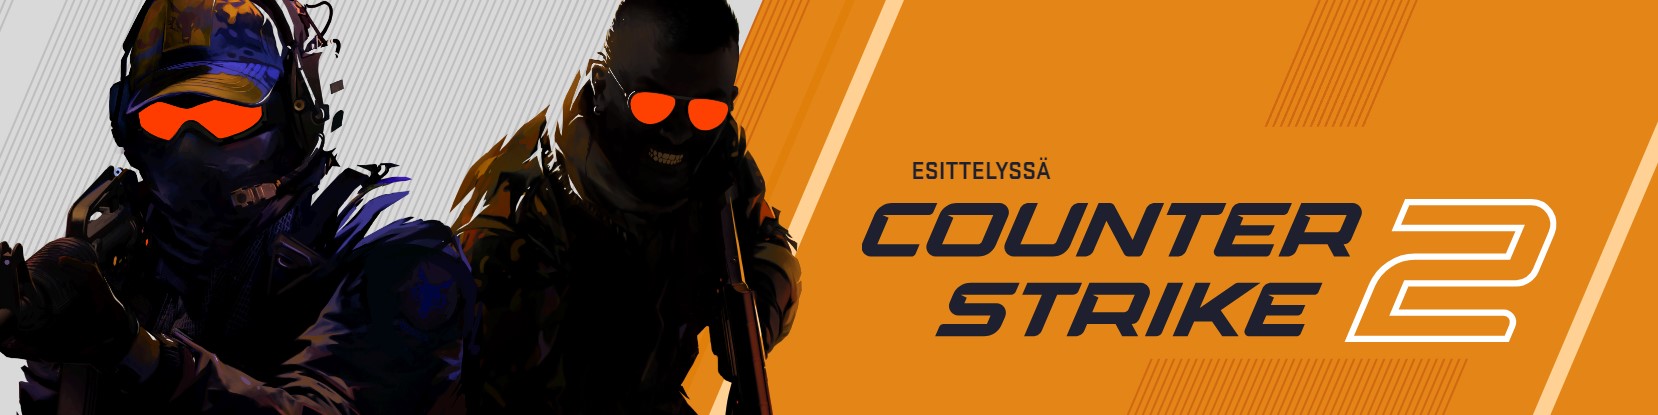 Counter-Strike 2 (CS) suorastaan